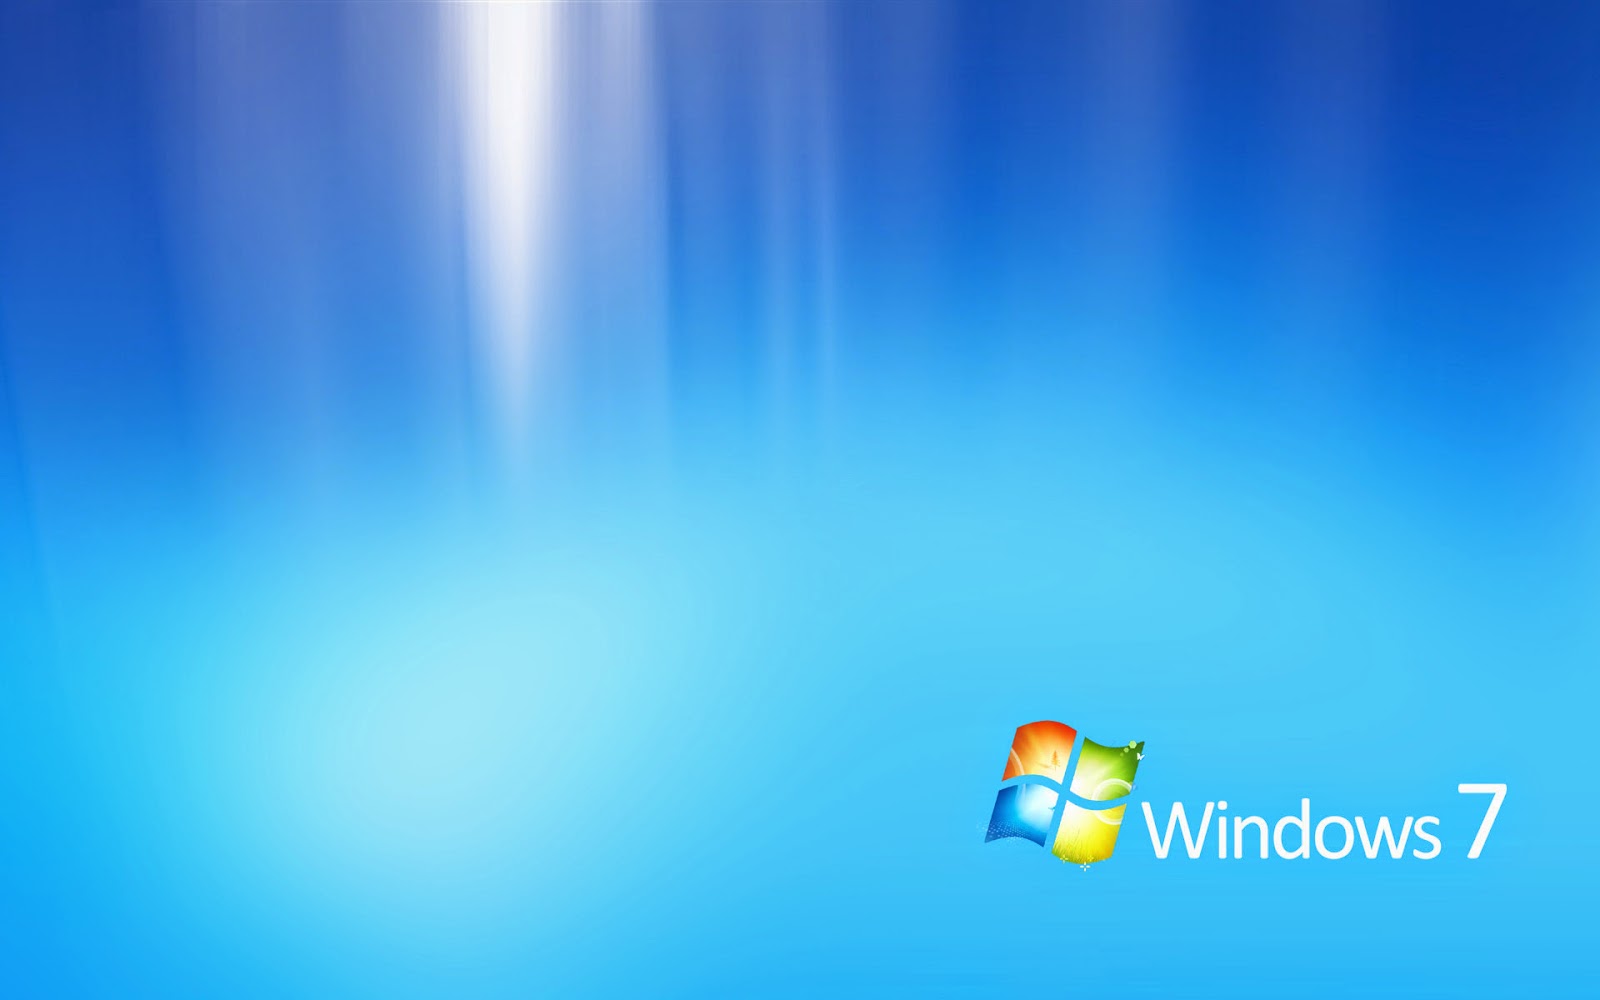 Live desktop wallpaper for windows 7